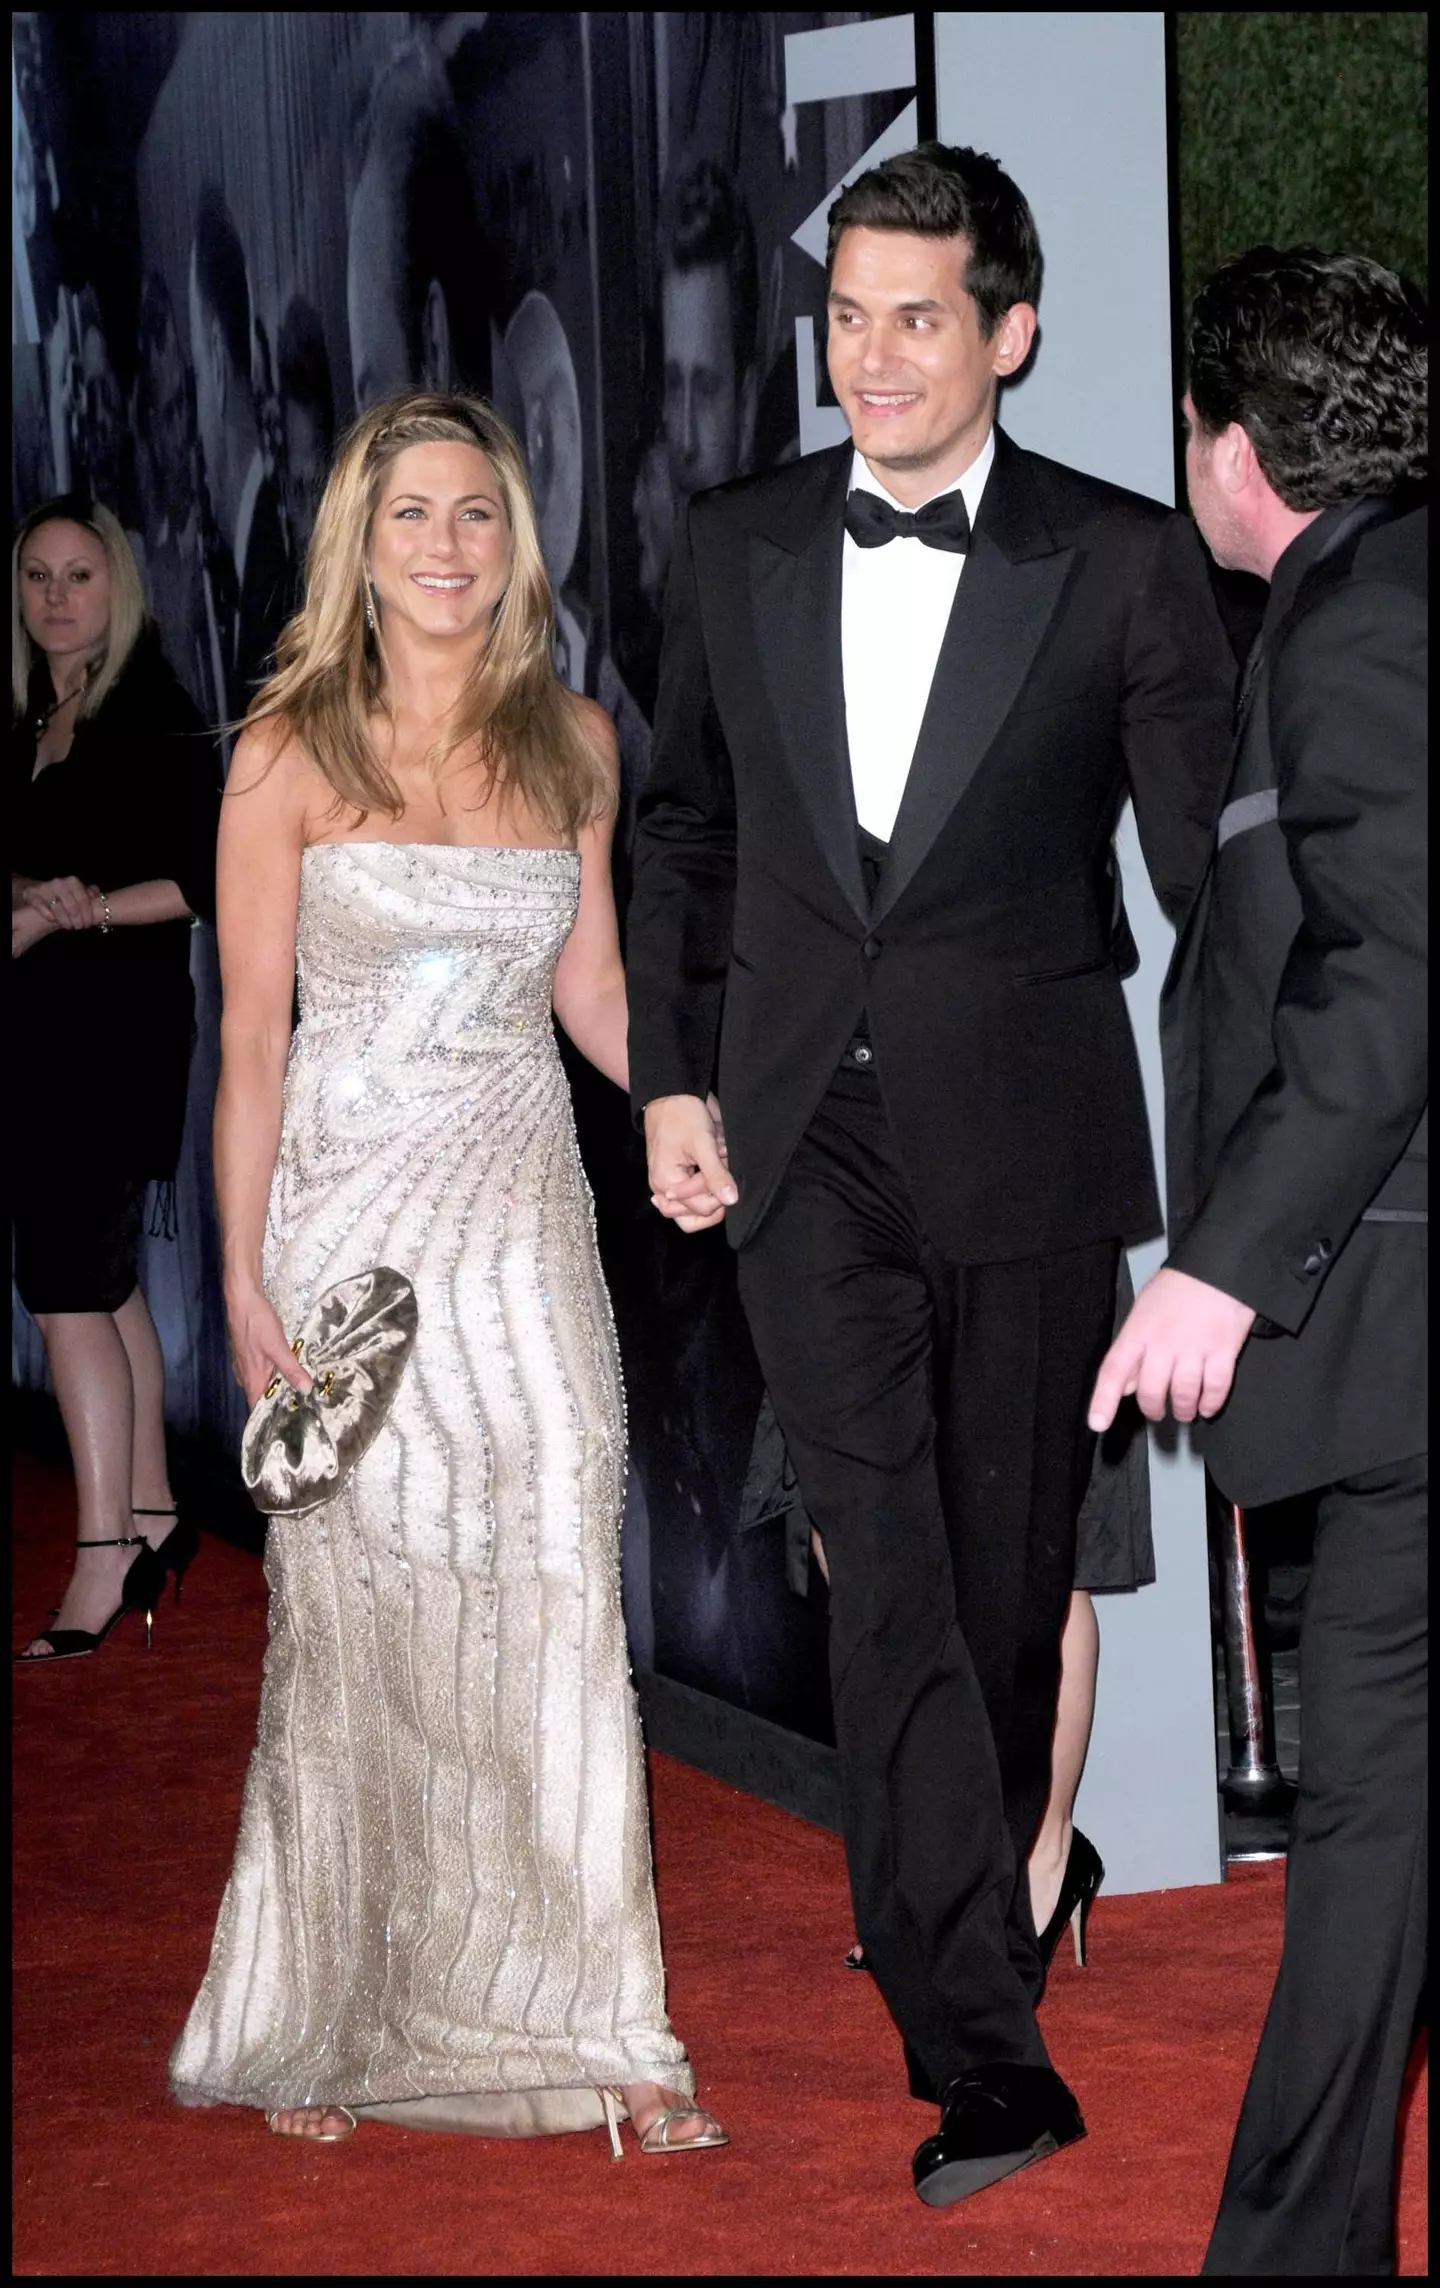 Mayer also dated Jennifer Aniston.